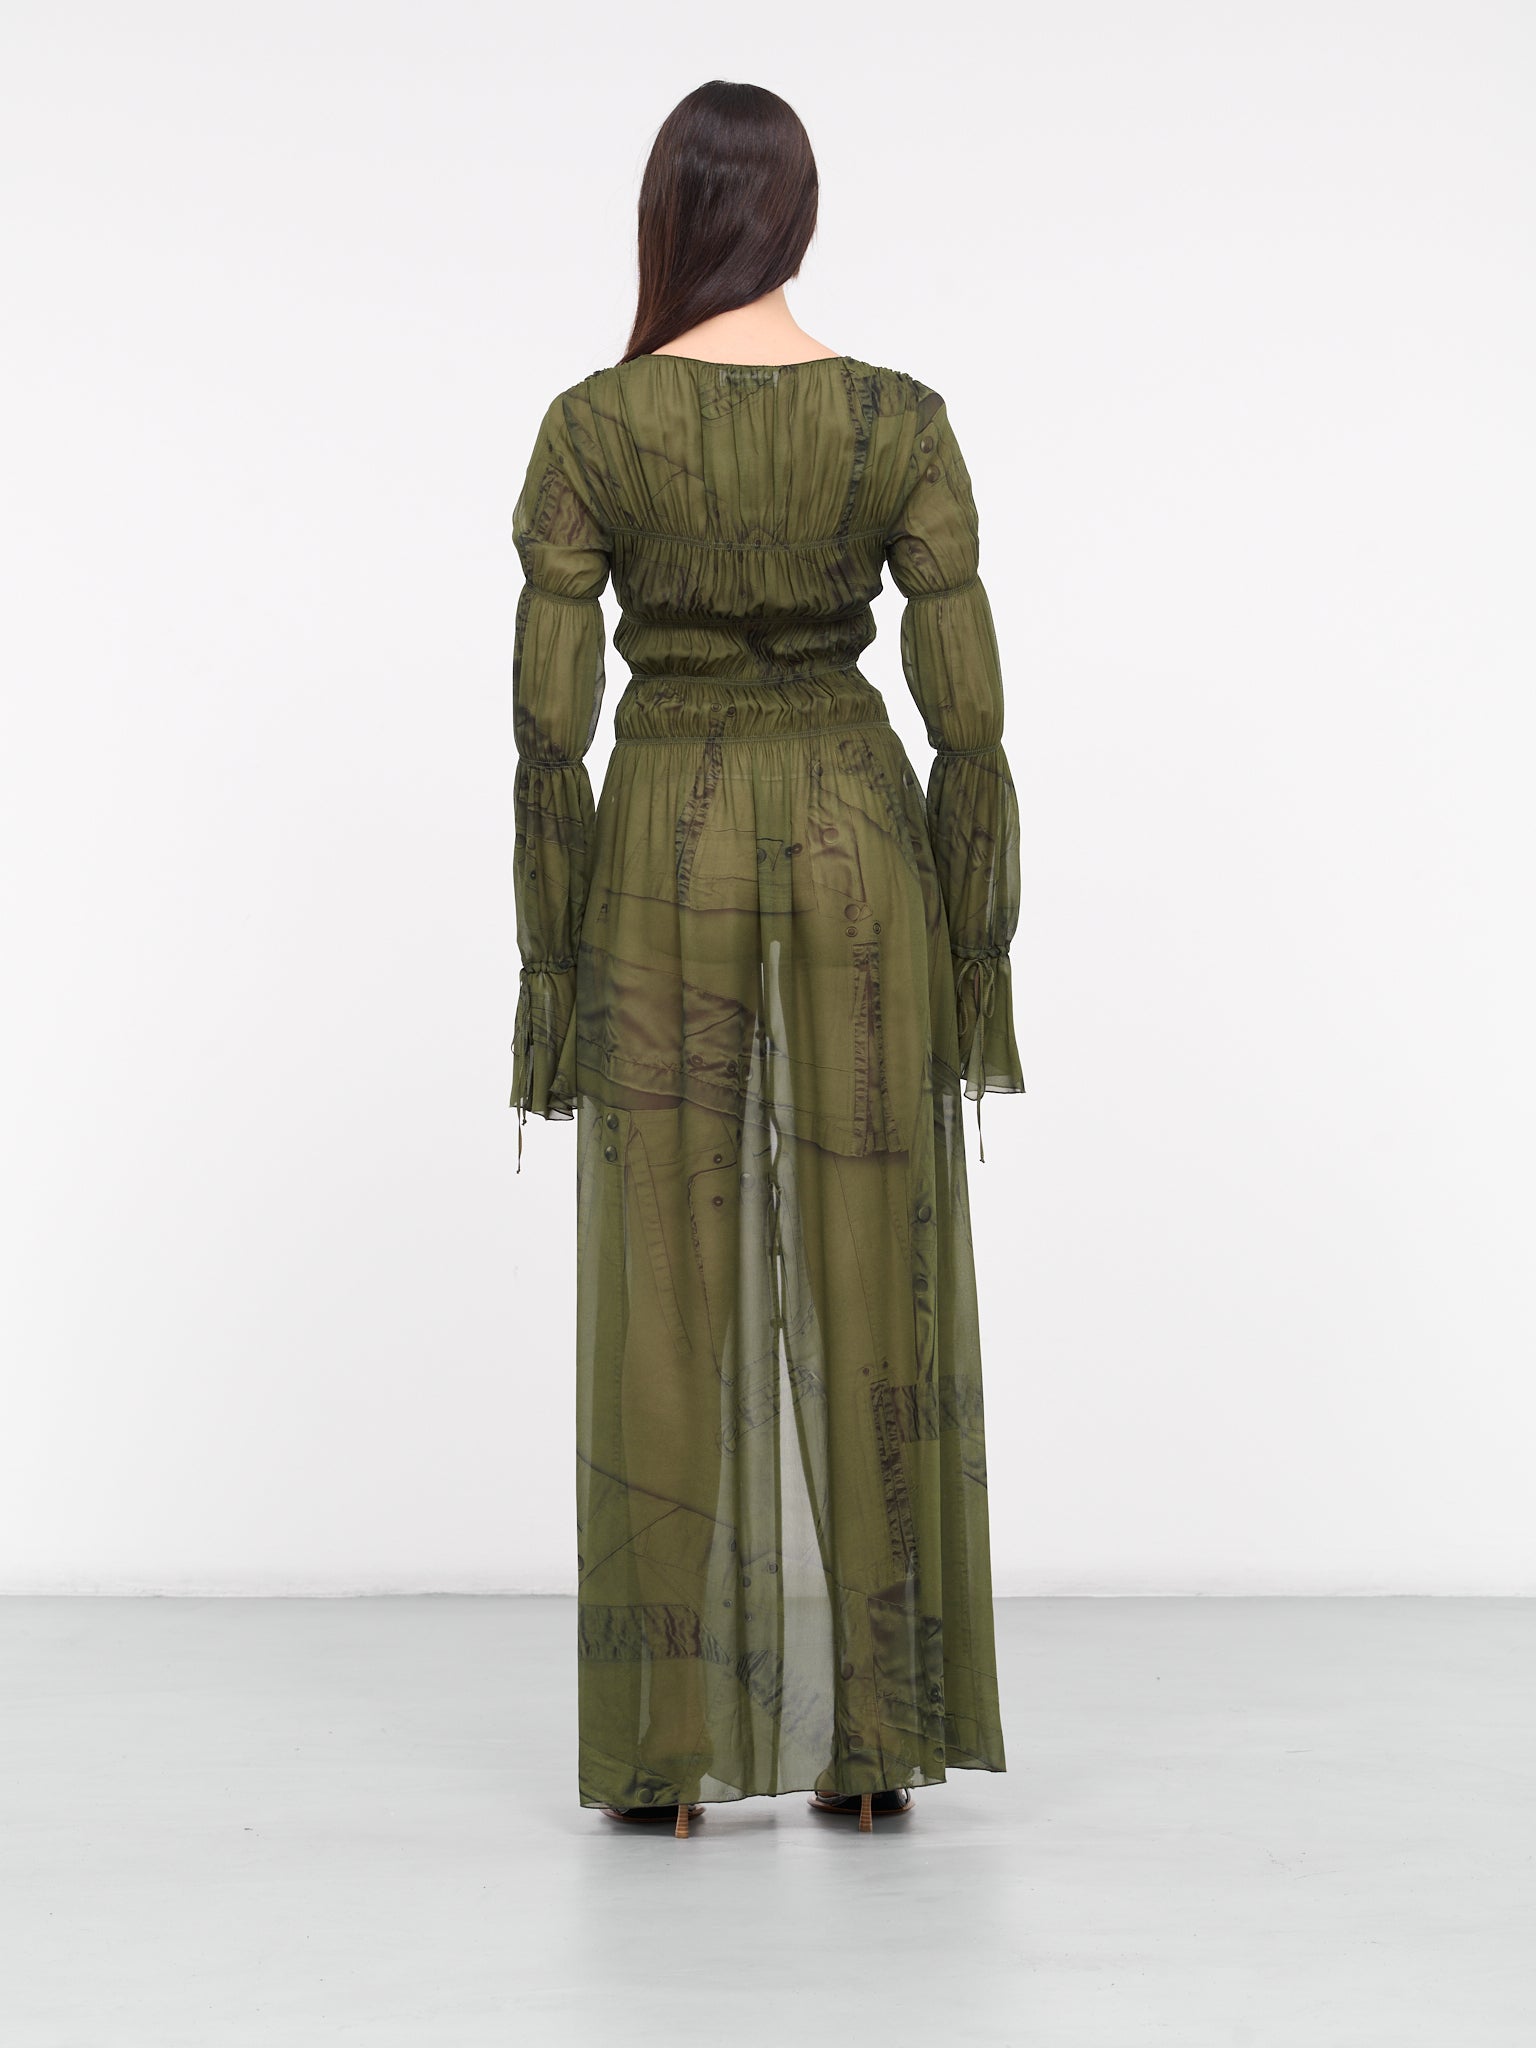 Camouflage Python Print Dress (2A450A-T5699-MILITARY/BLACK)